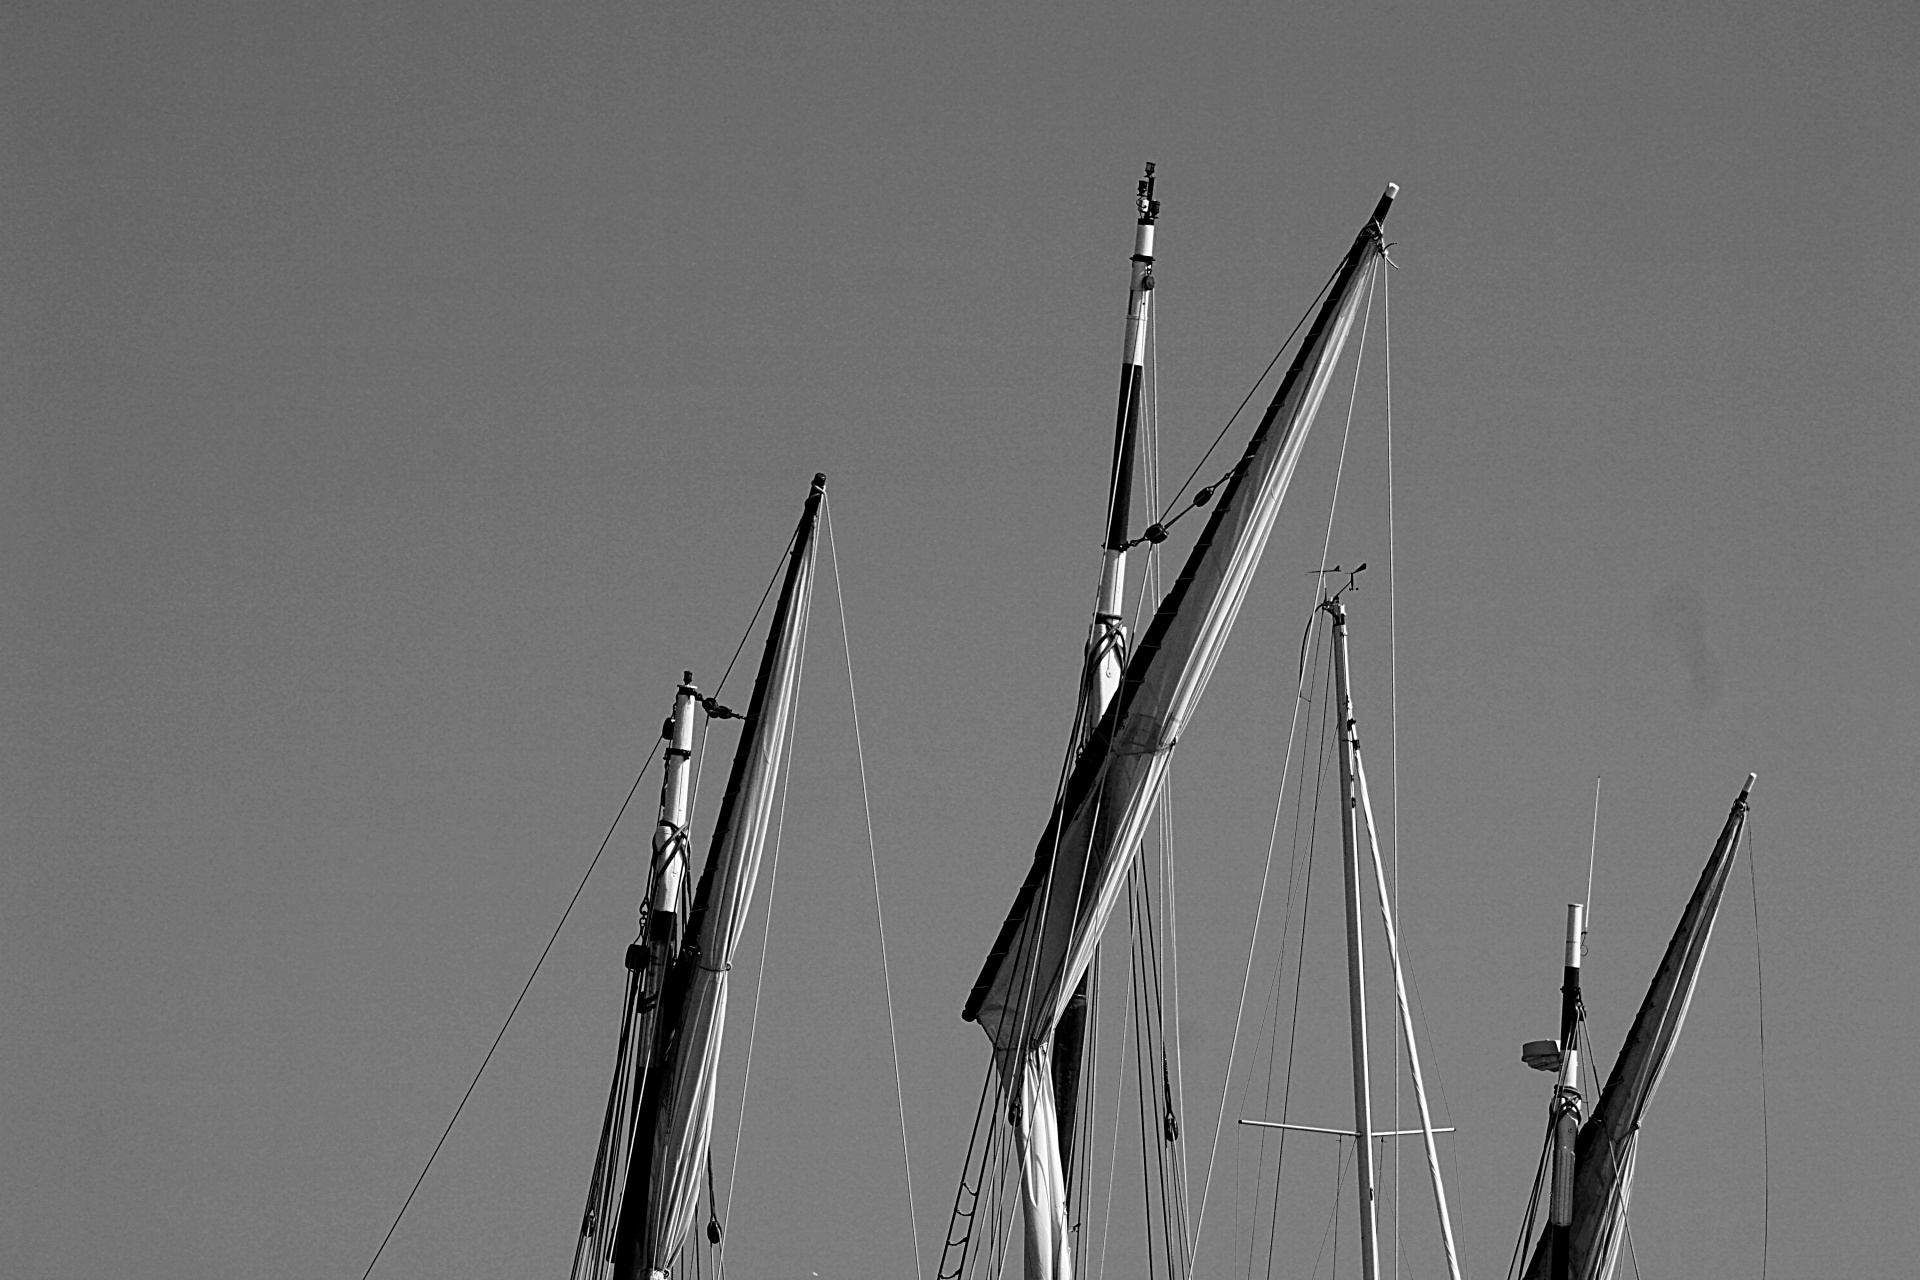 Folded Sails